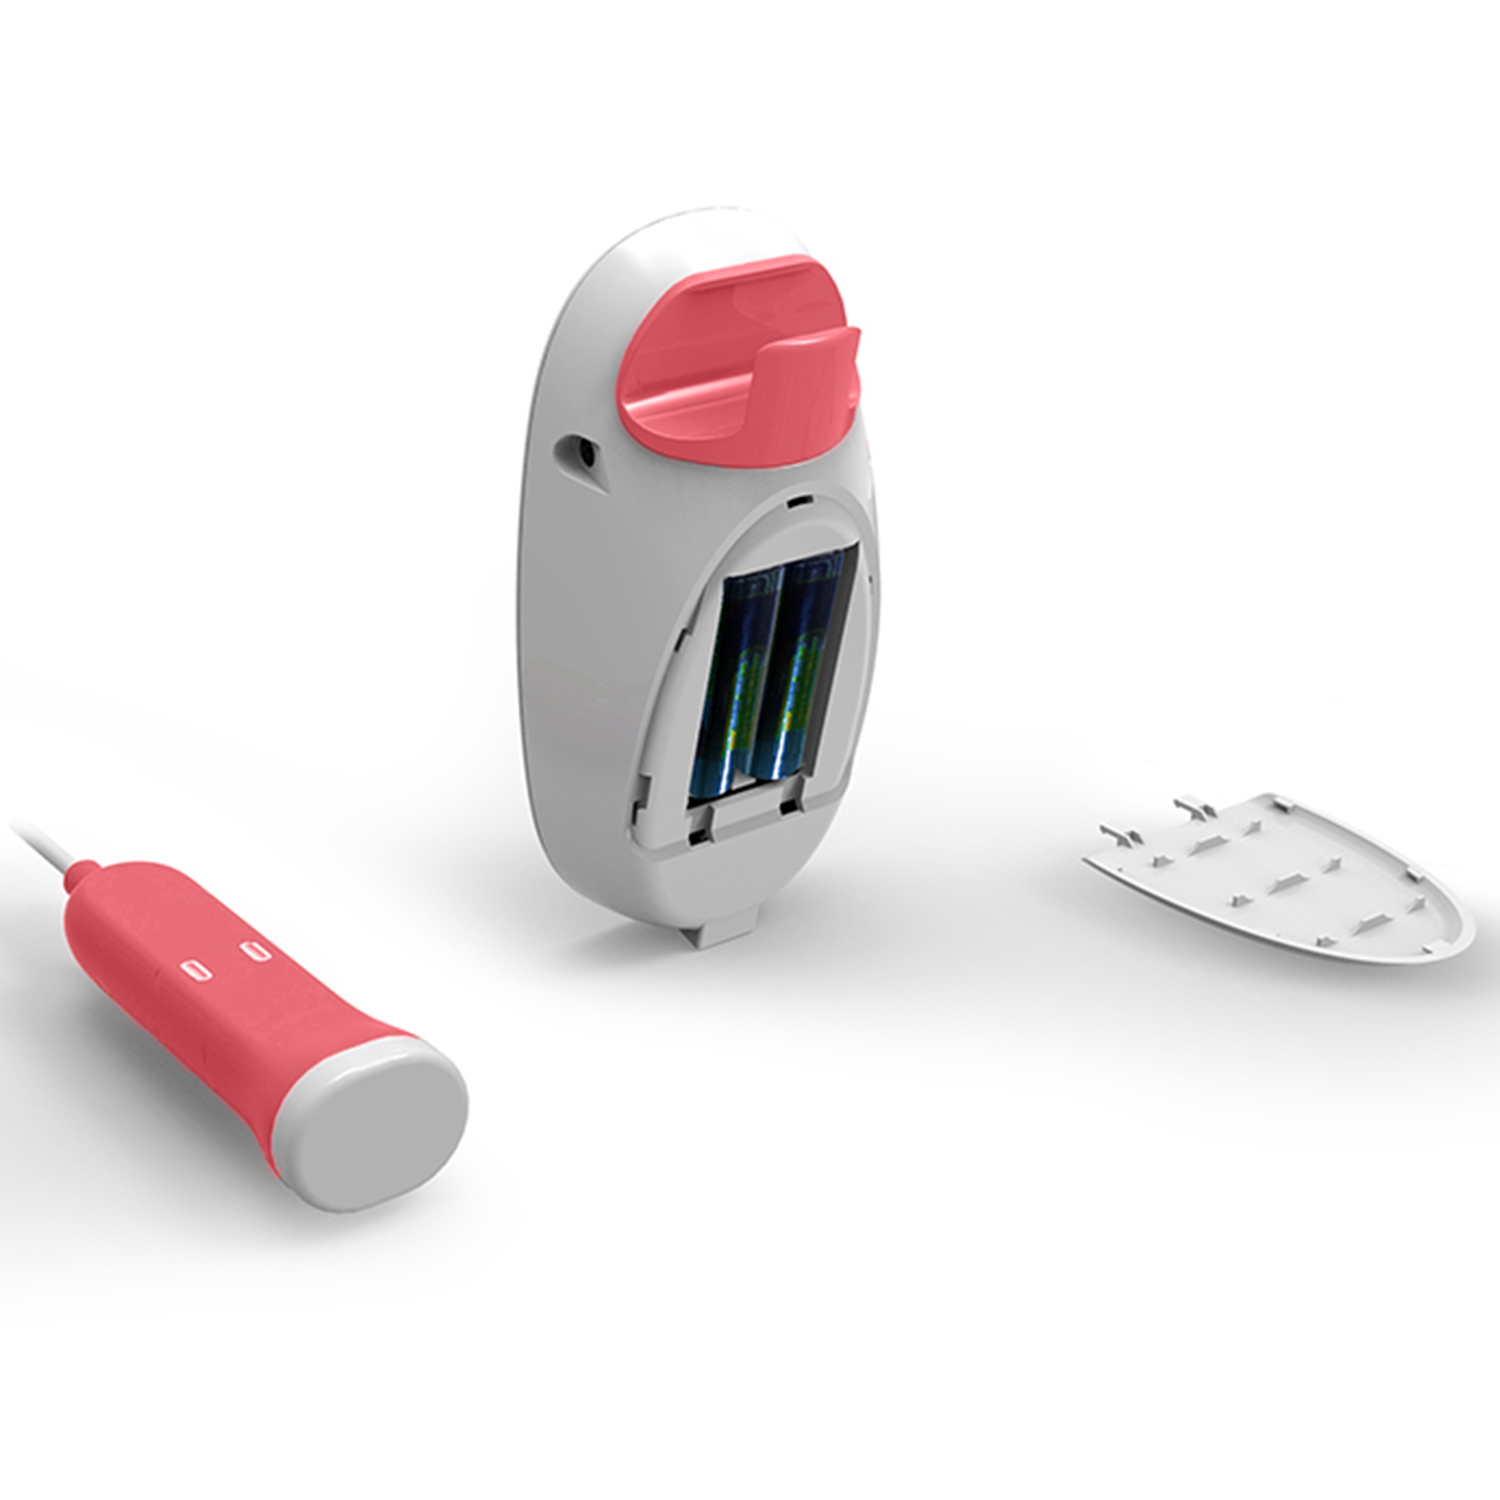 Factory made hot-sale Visage Blood Pressure Monitor - YM2T9 Fetal Favorite – FuluoEr detail pictures